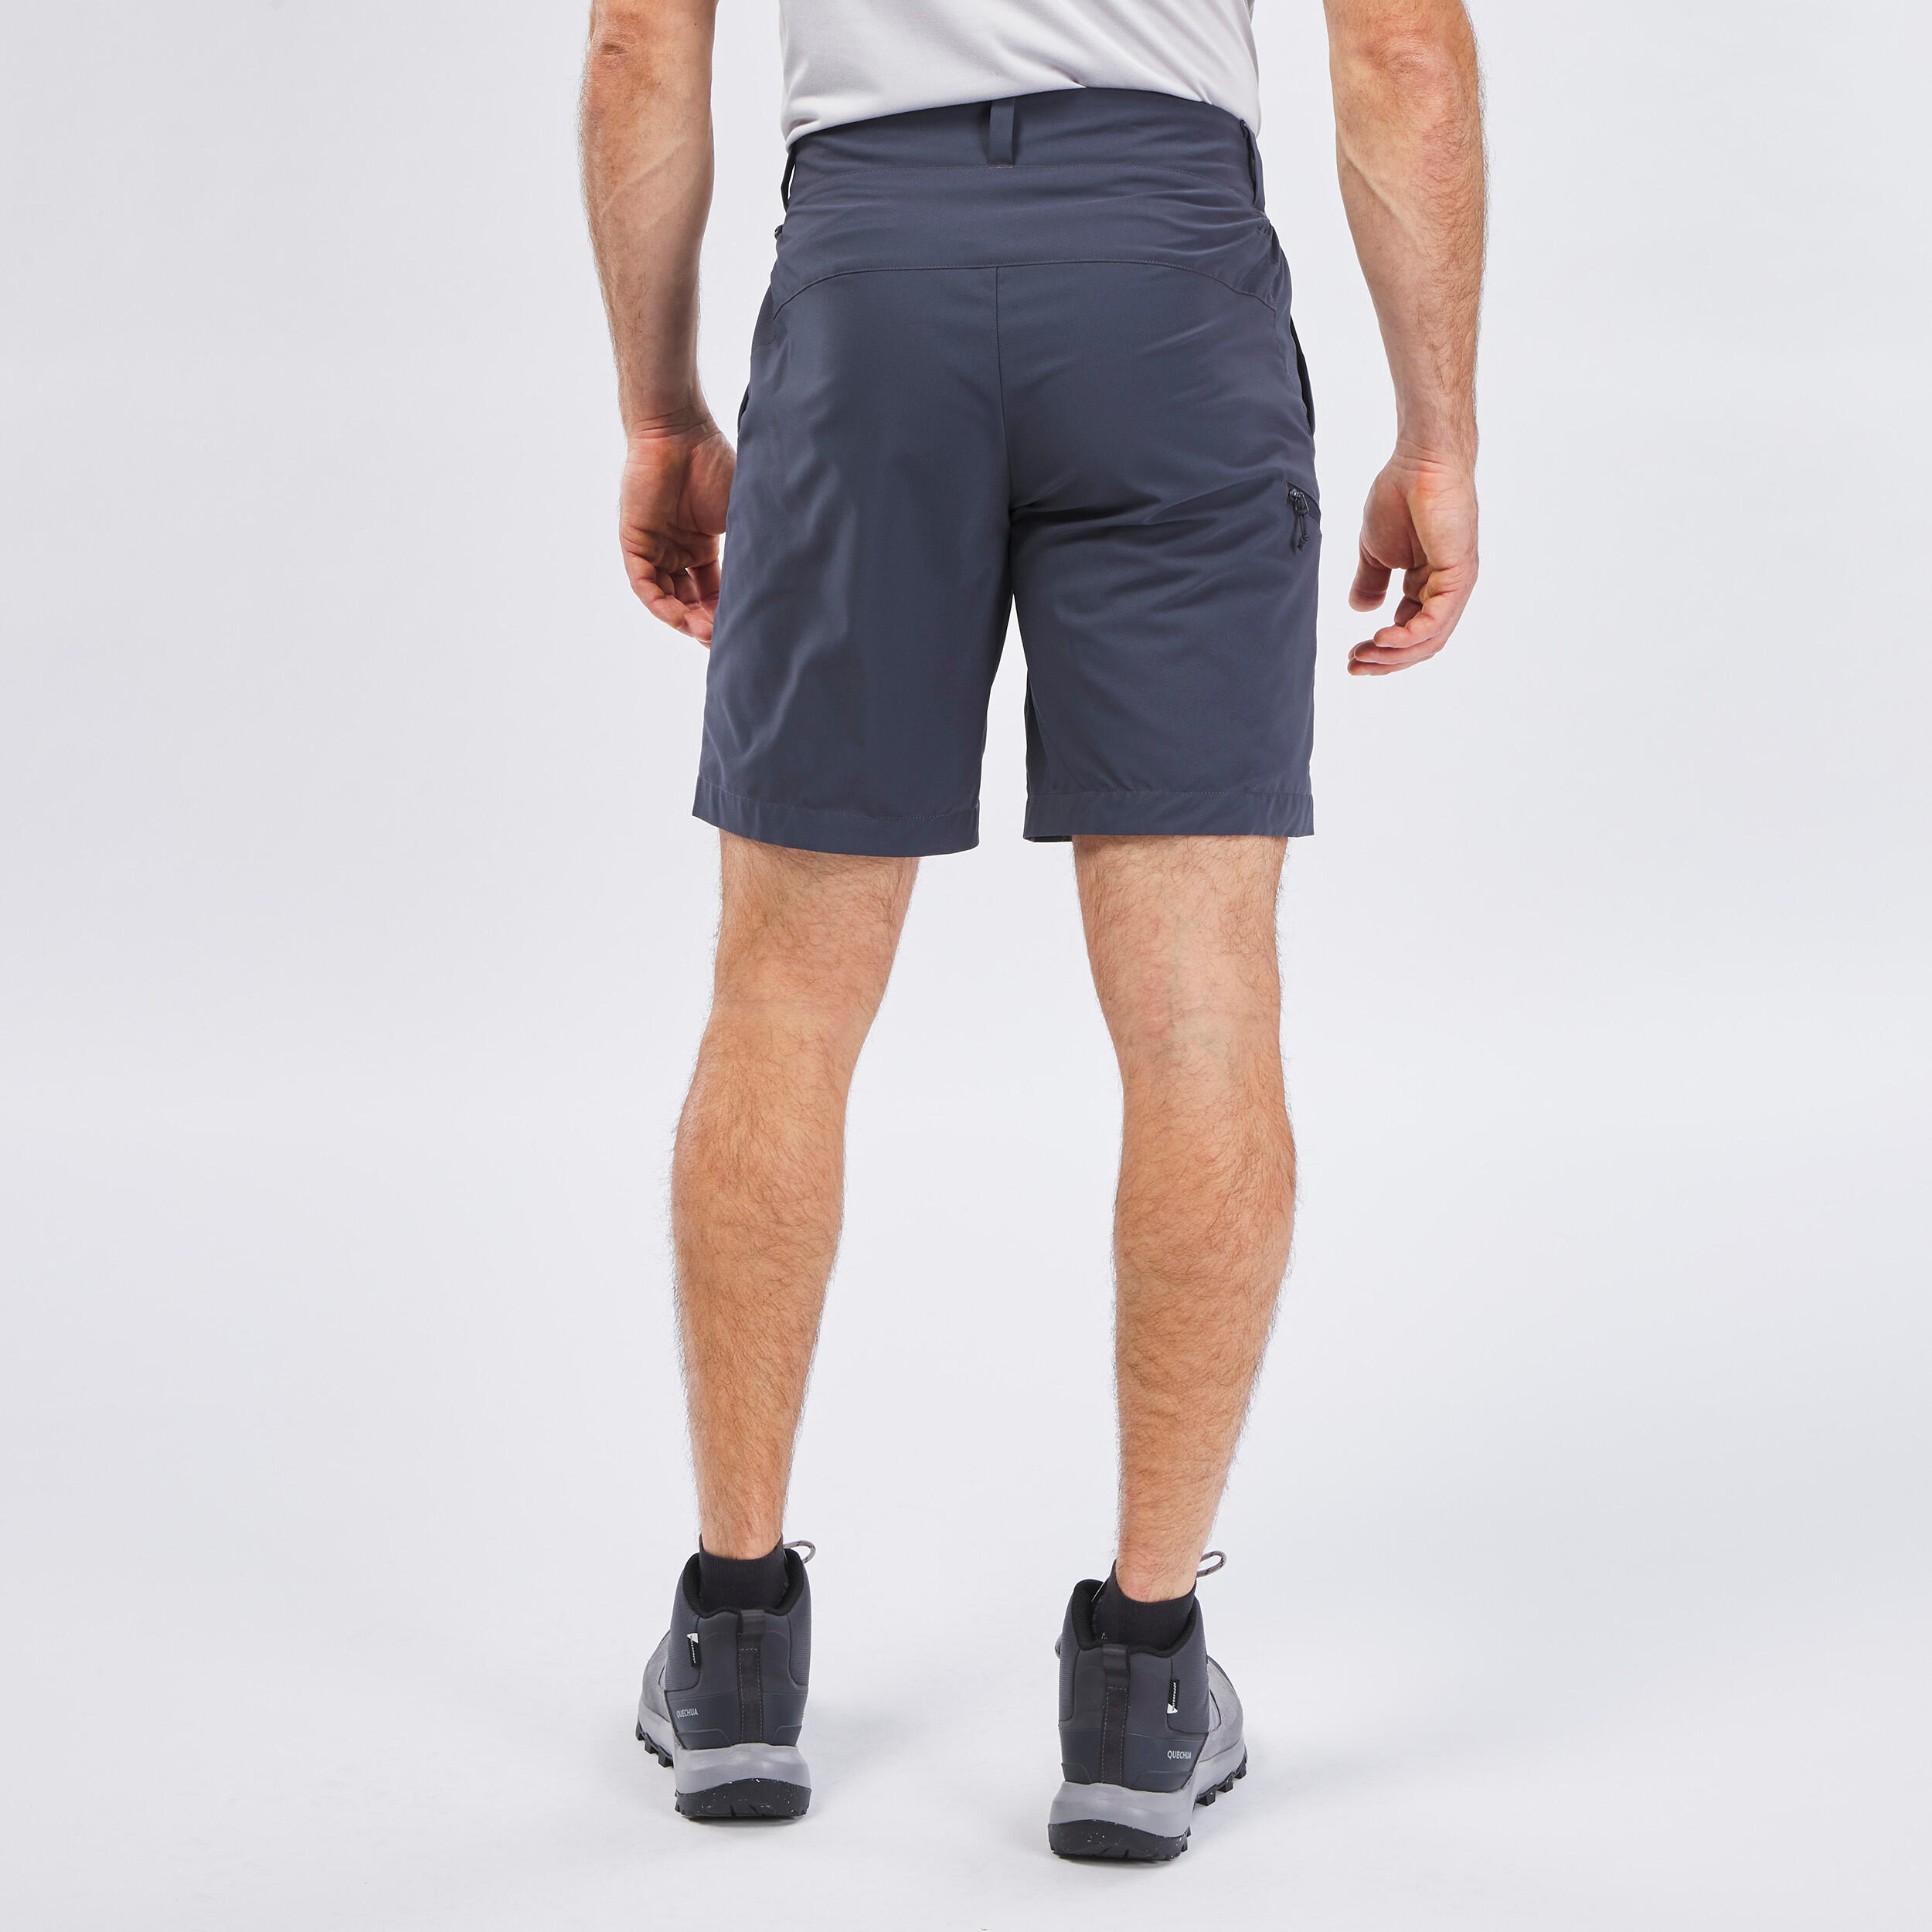 Men’s Golf Chino Shorts - MW 500 Grey